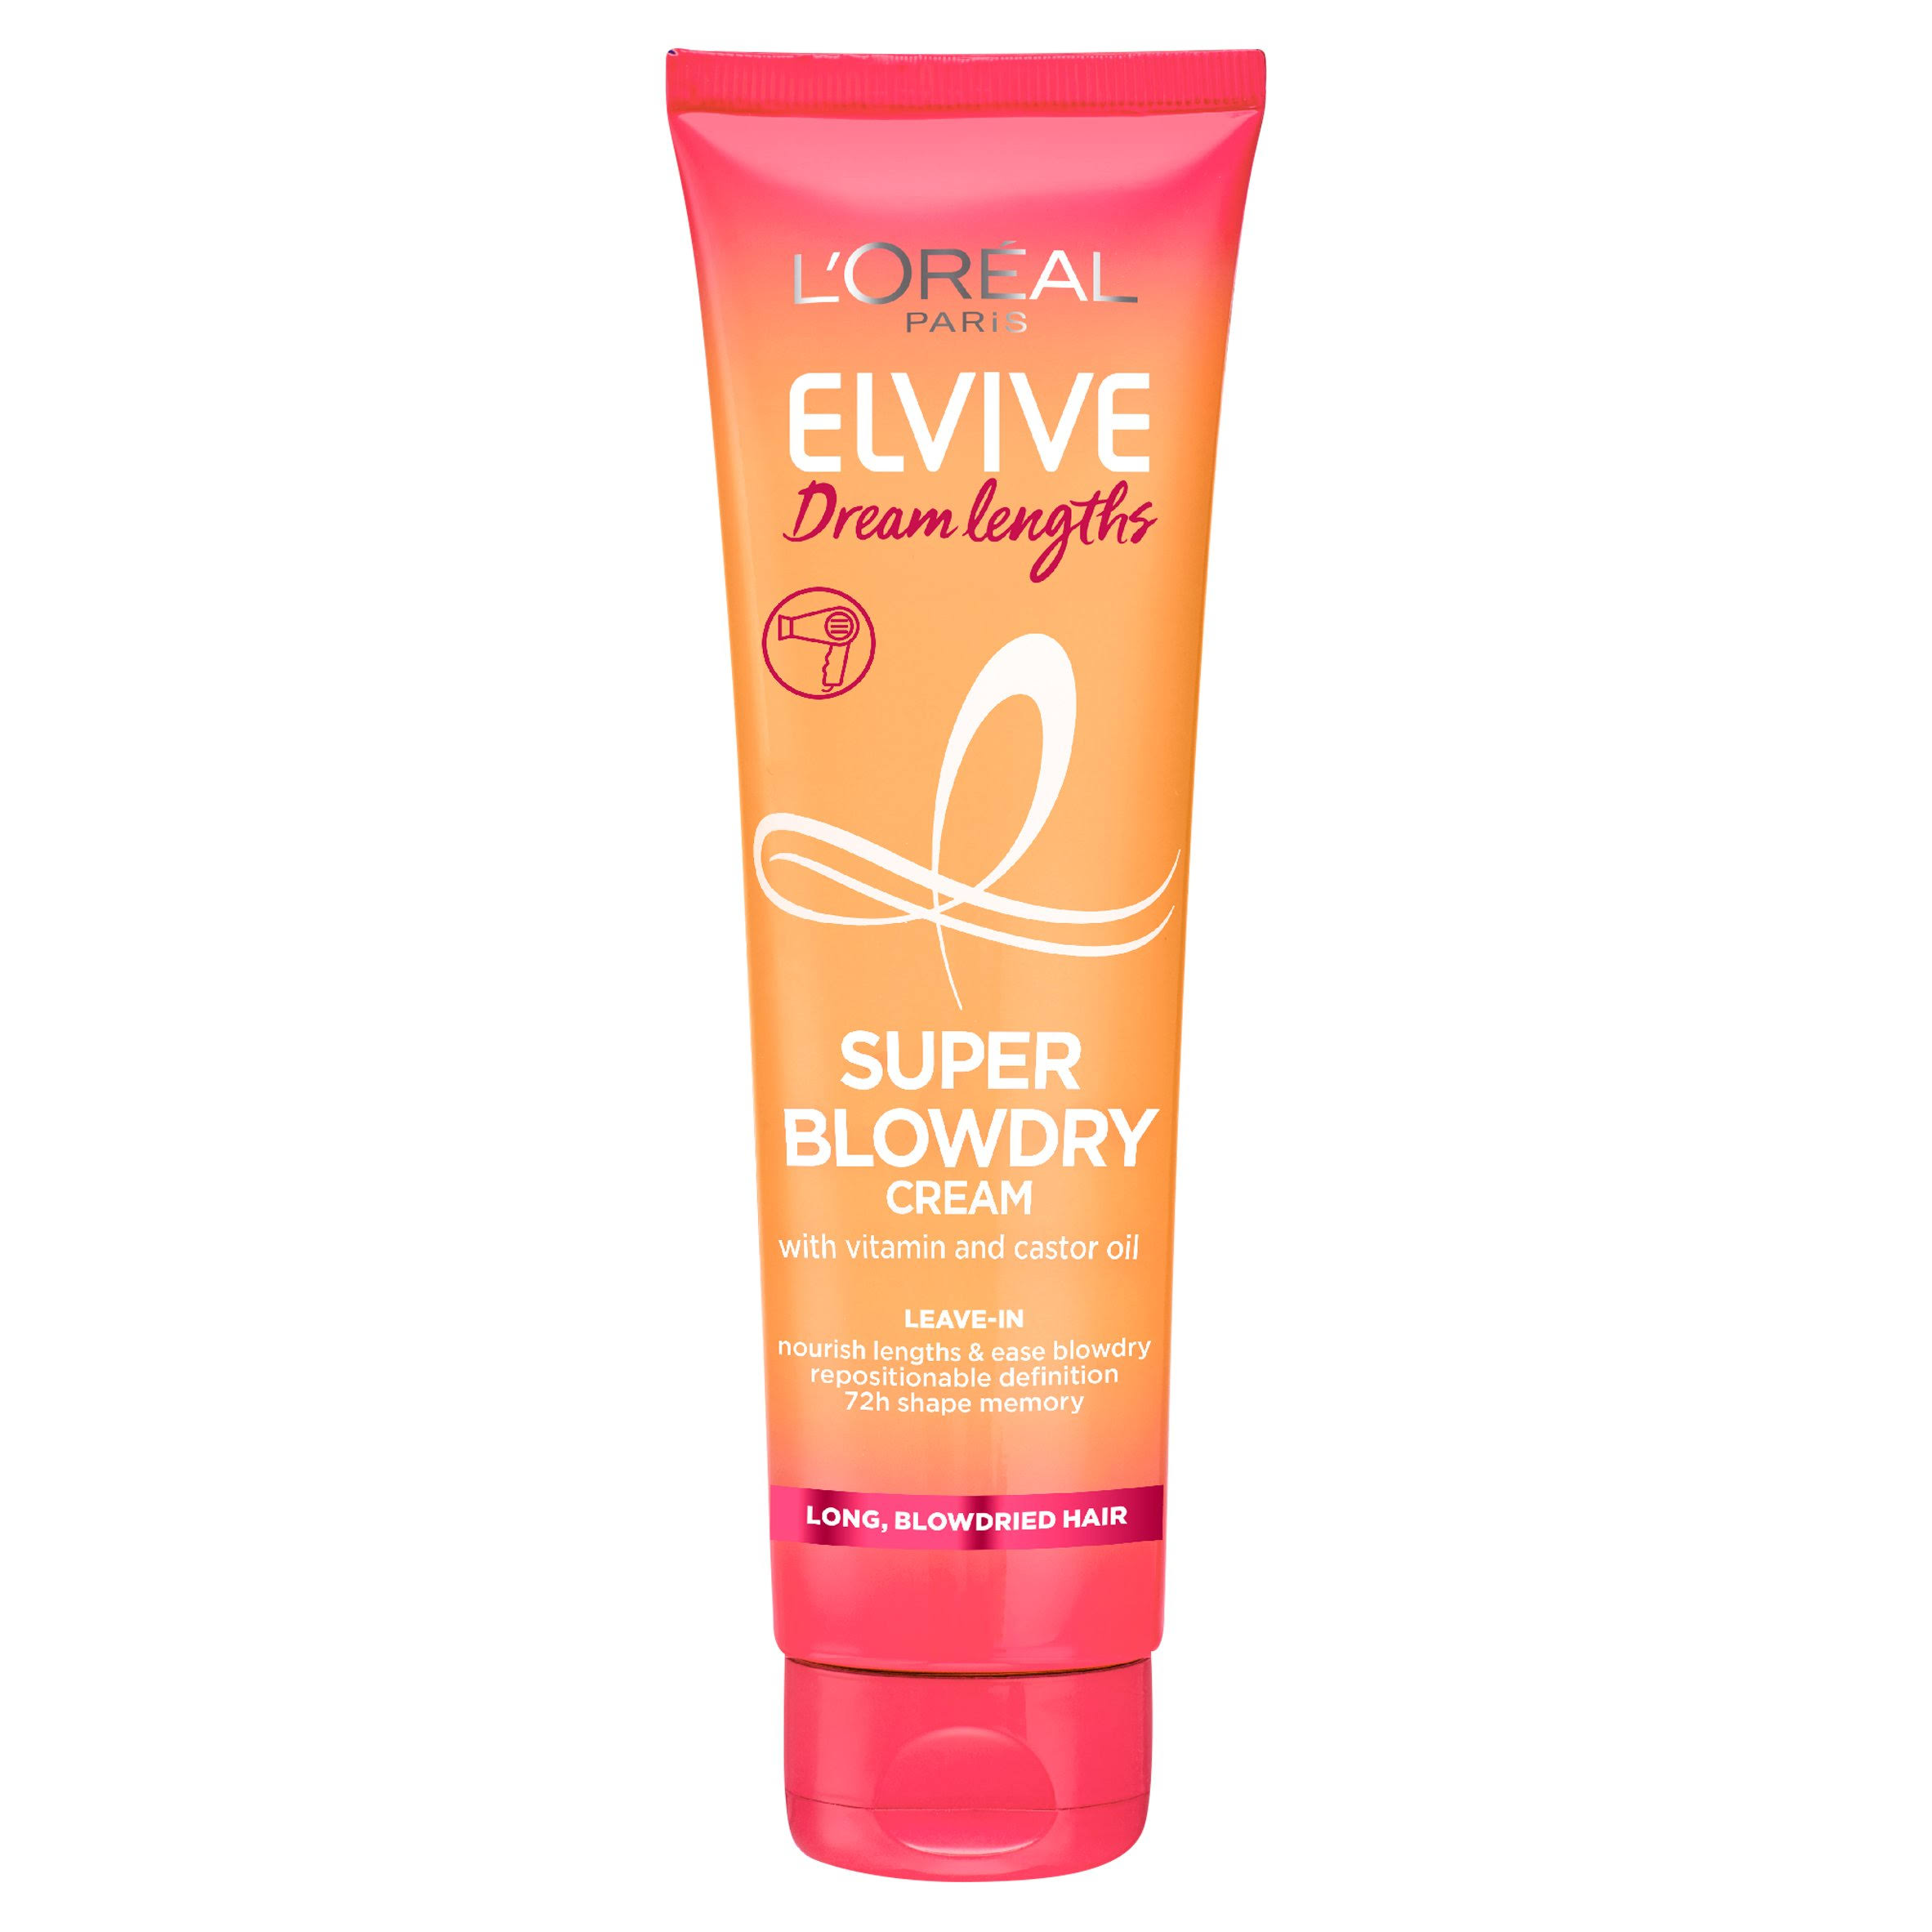 Dream Lengths Super Blowdry Cream by L'Oreal Elvive 150ml